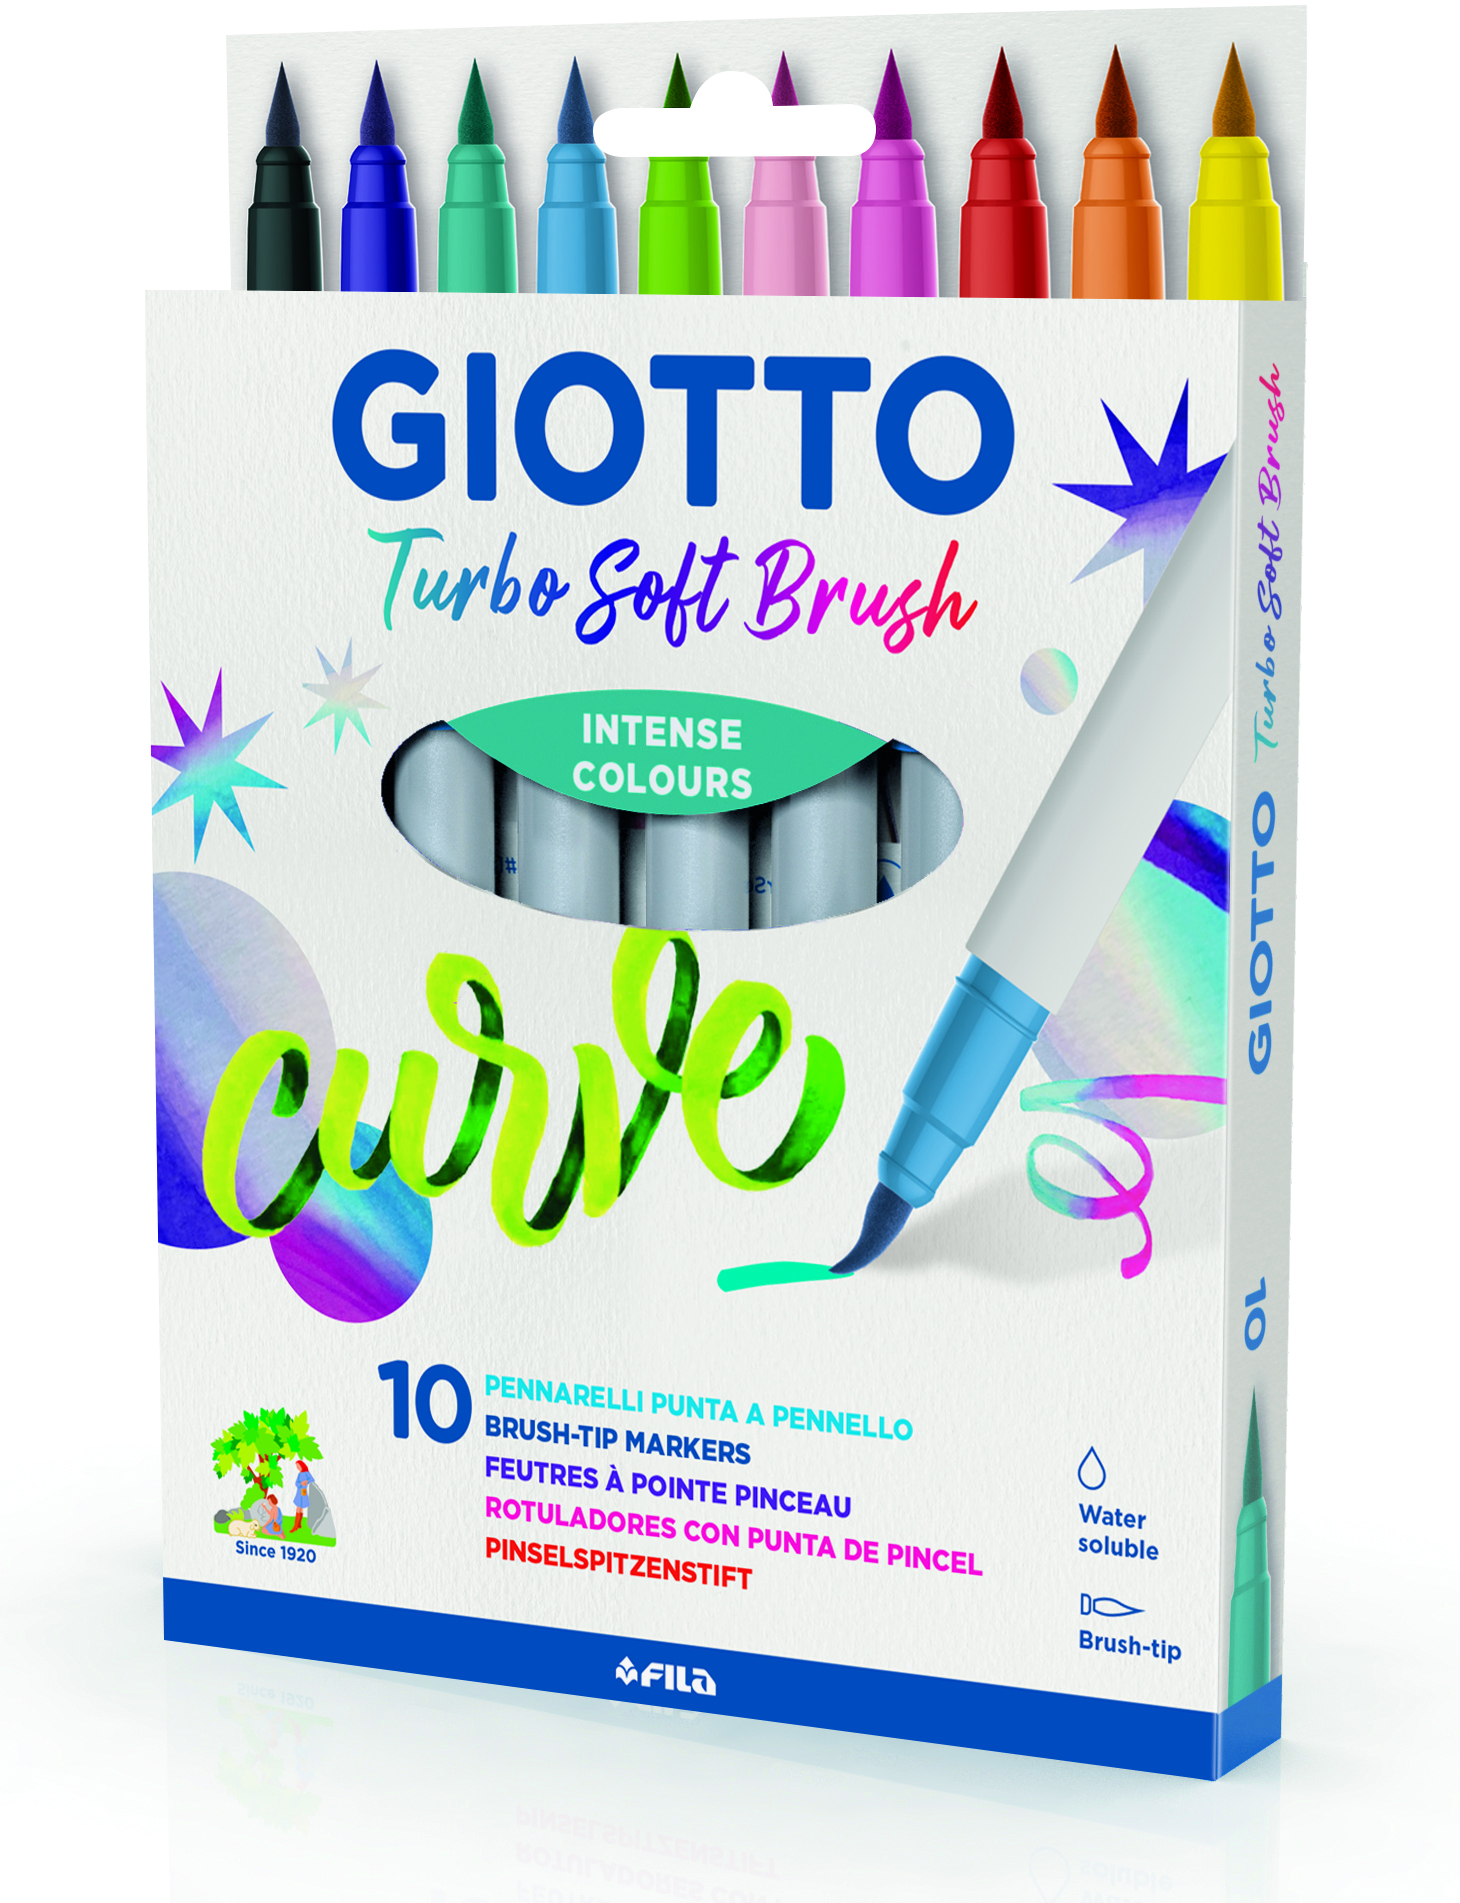 Giotto Turbo Soft Brush 10pcs